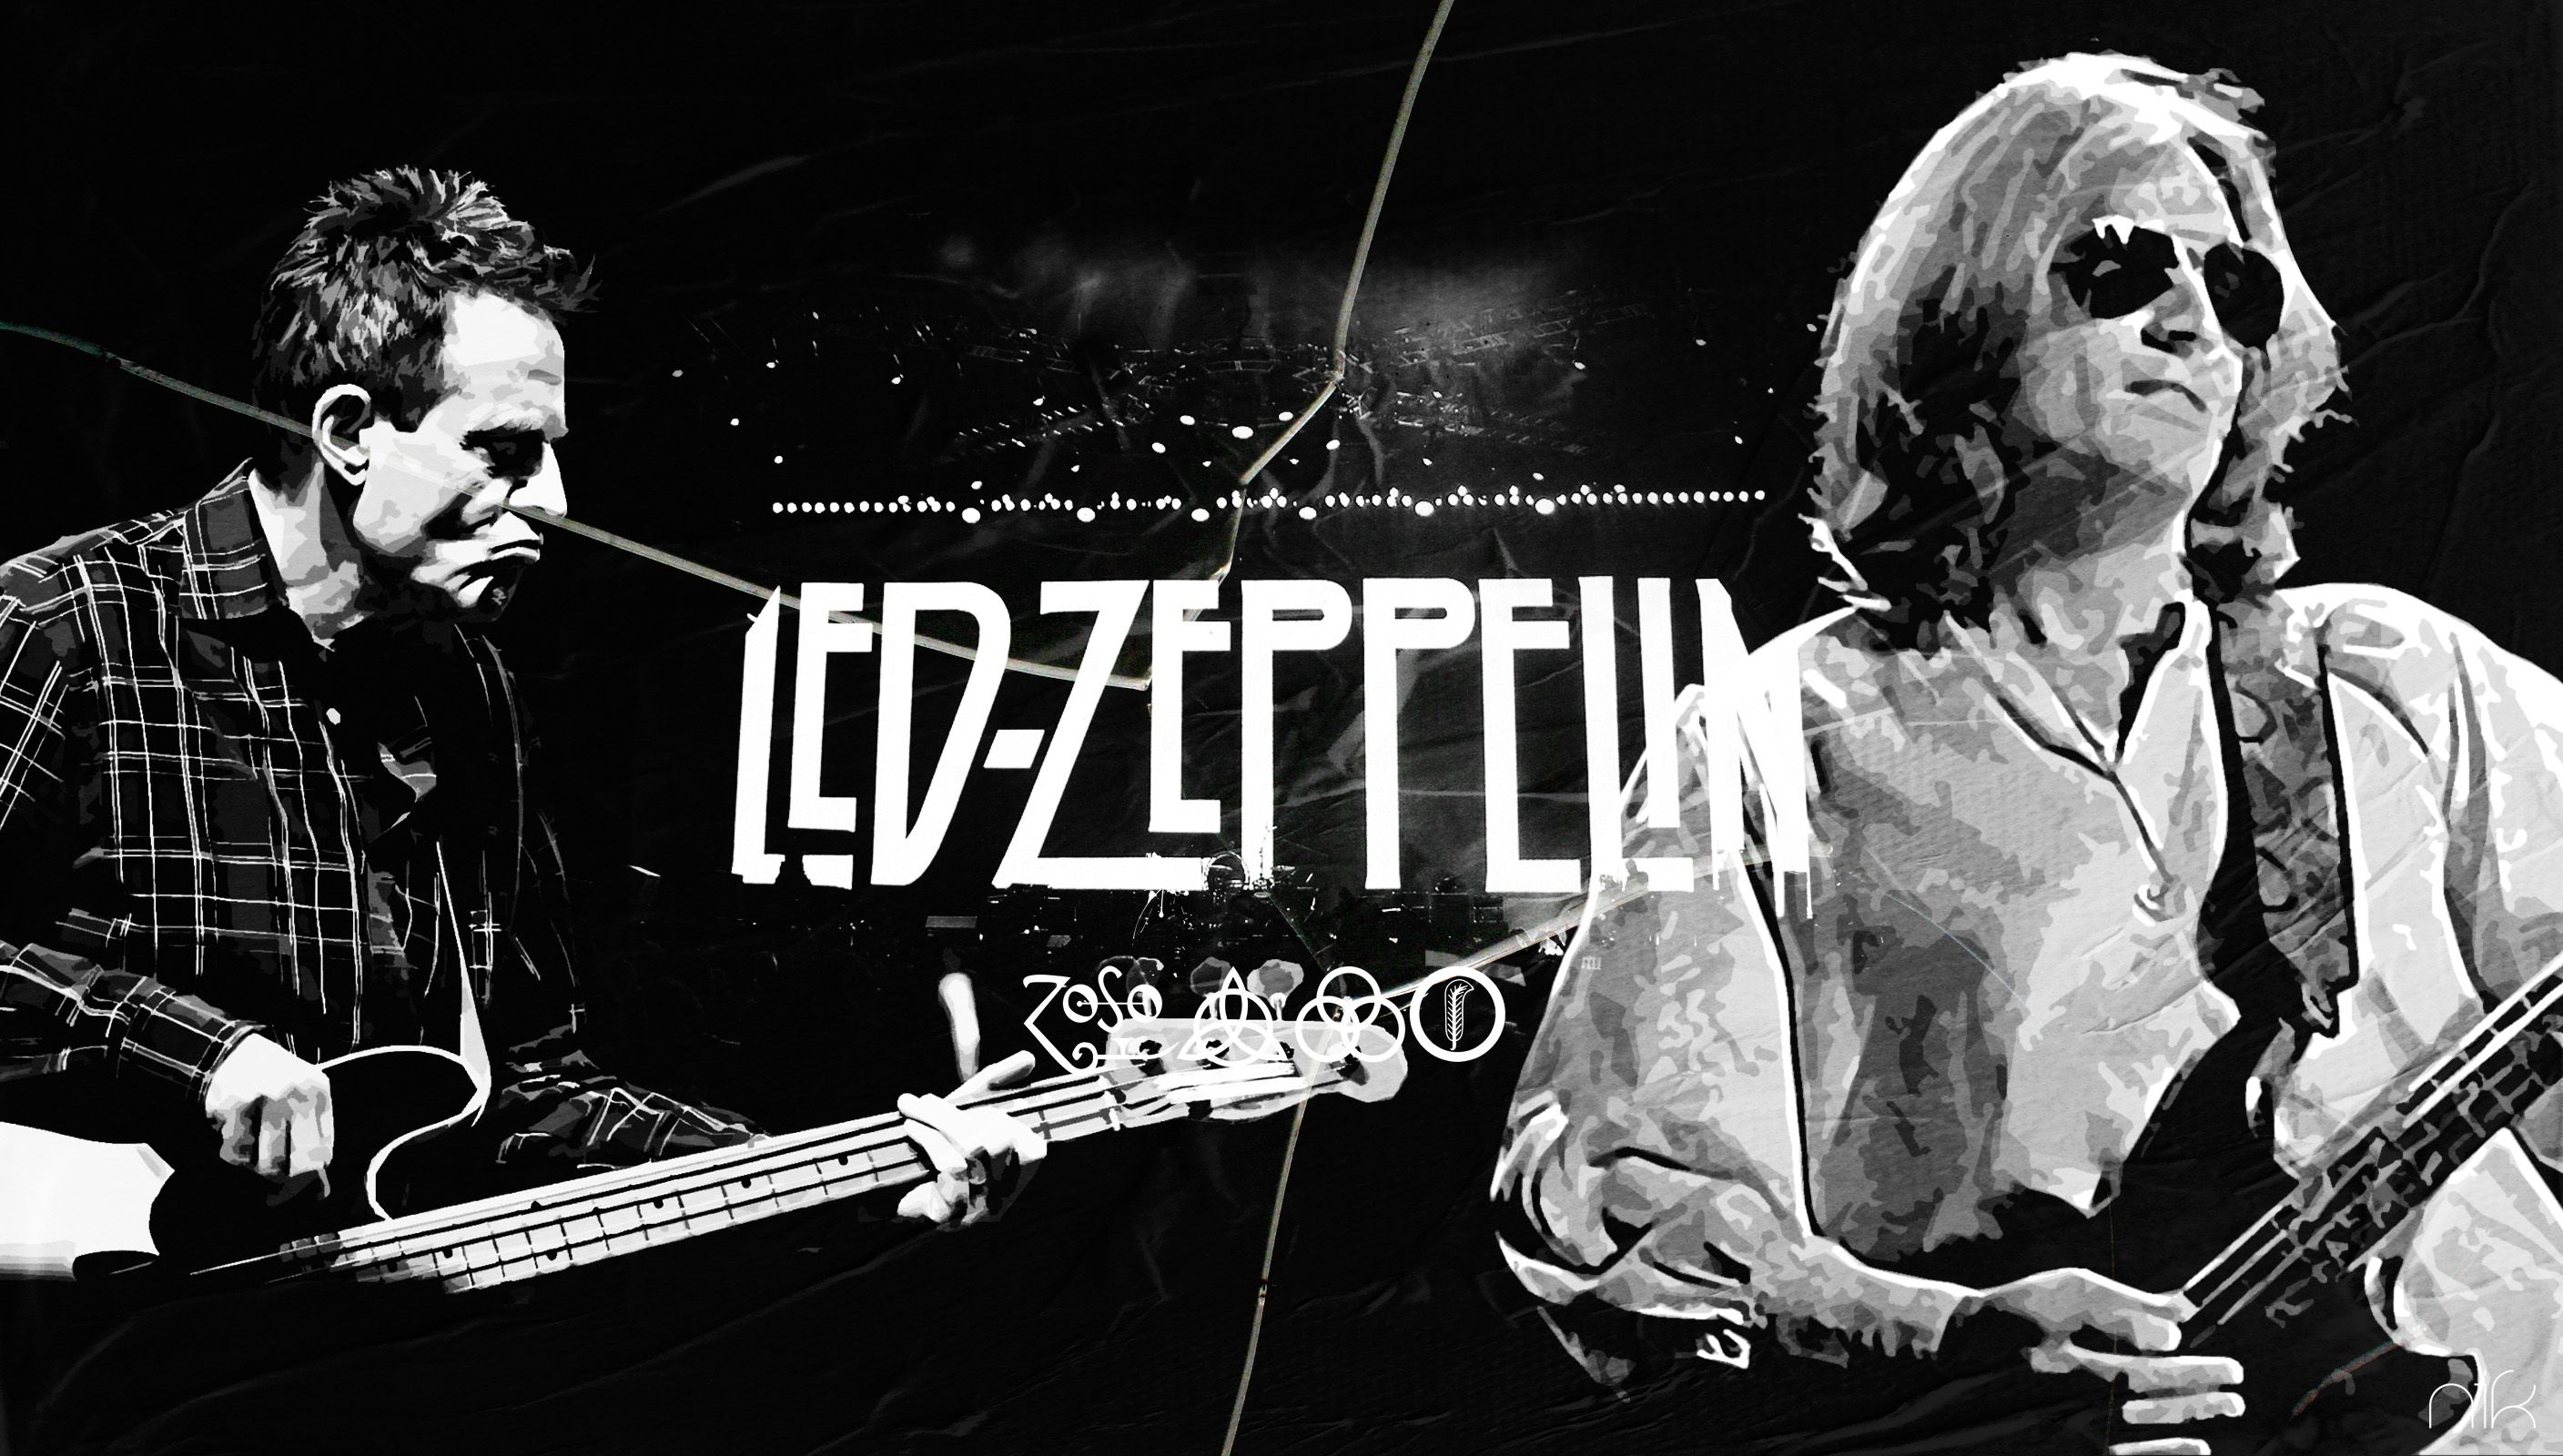 Led Zeppelin Wallpaper 3. Led zeppelin, Zeppelin, Led zeppelin wallpaper